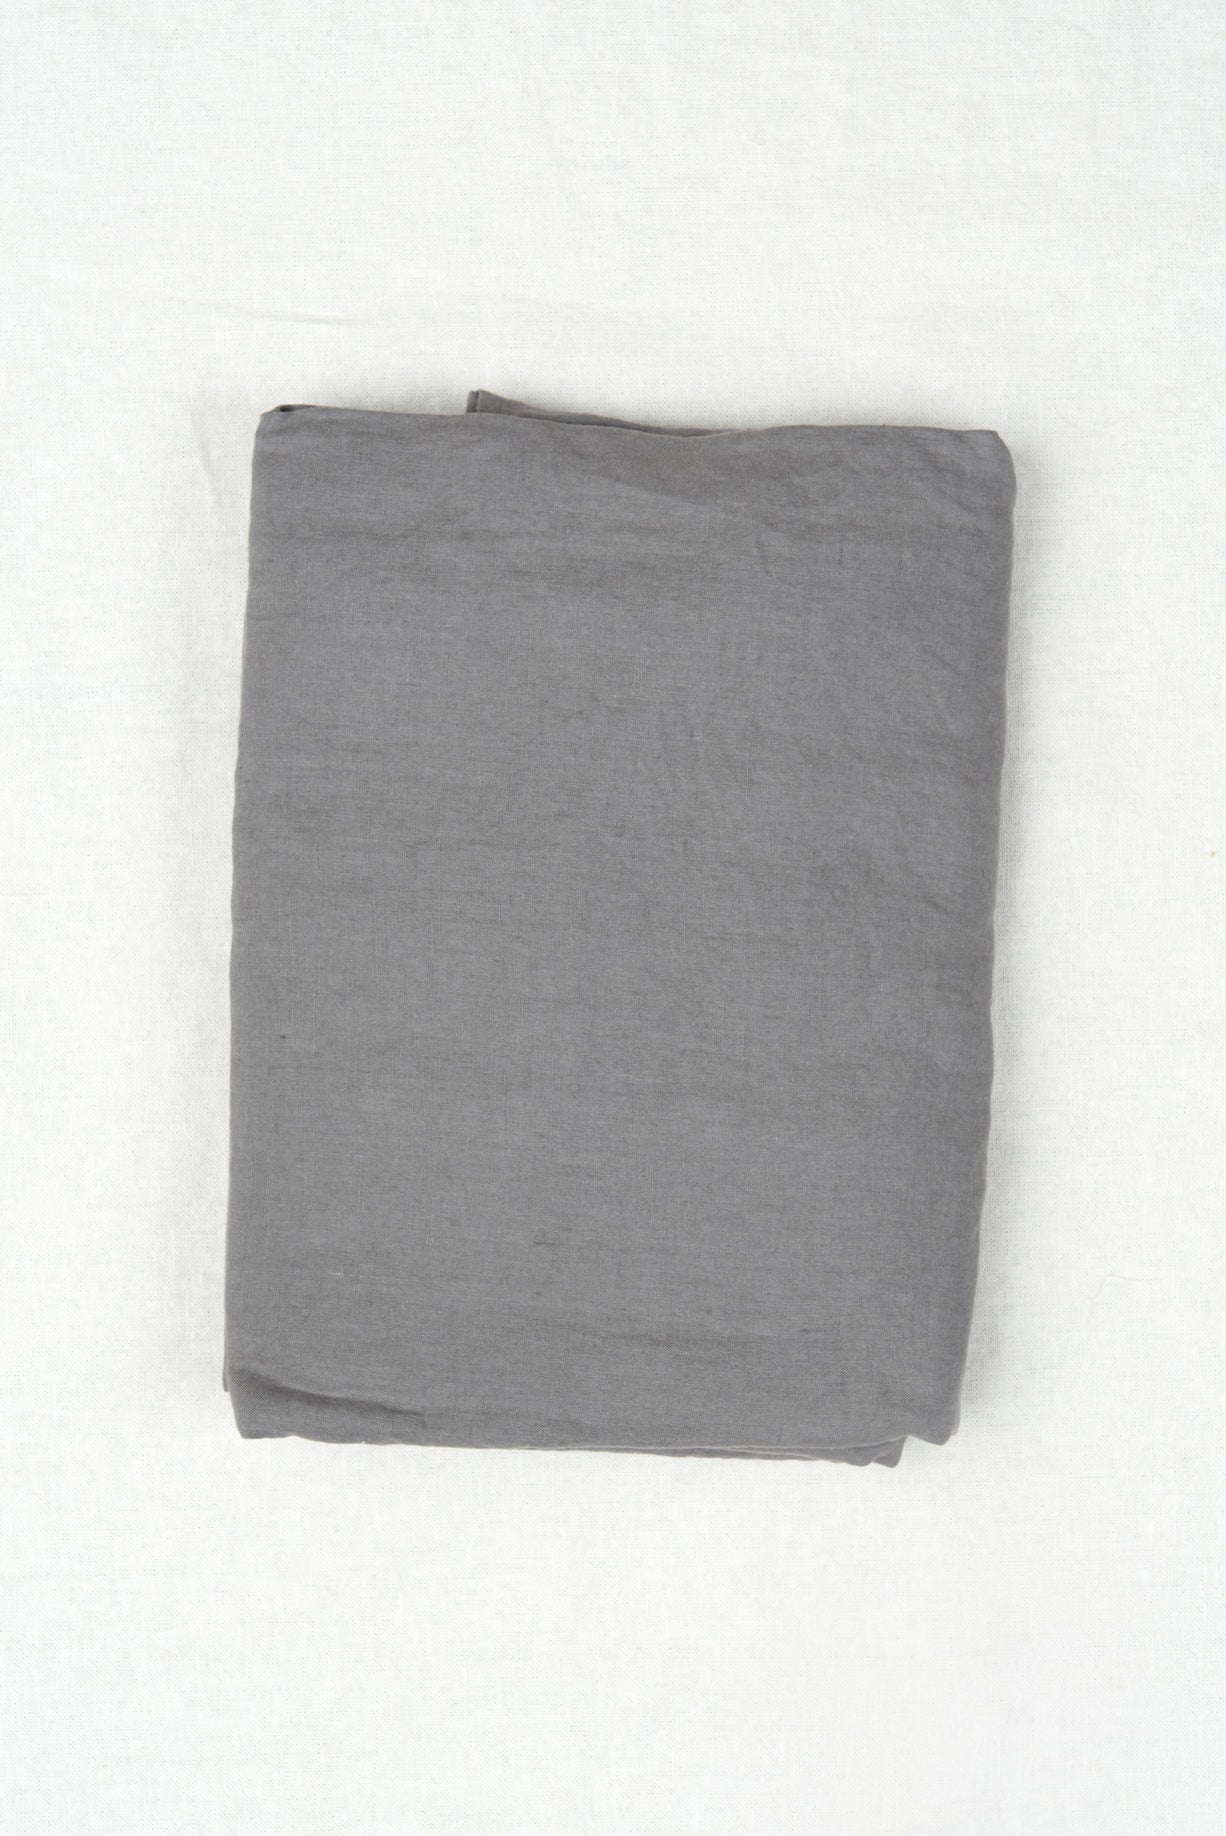 charcoal queen flat sheet in bed 